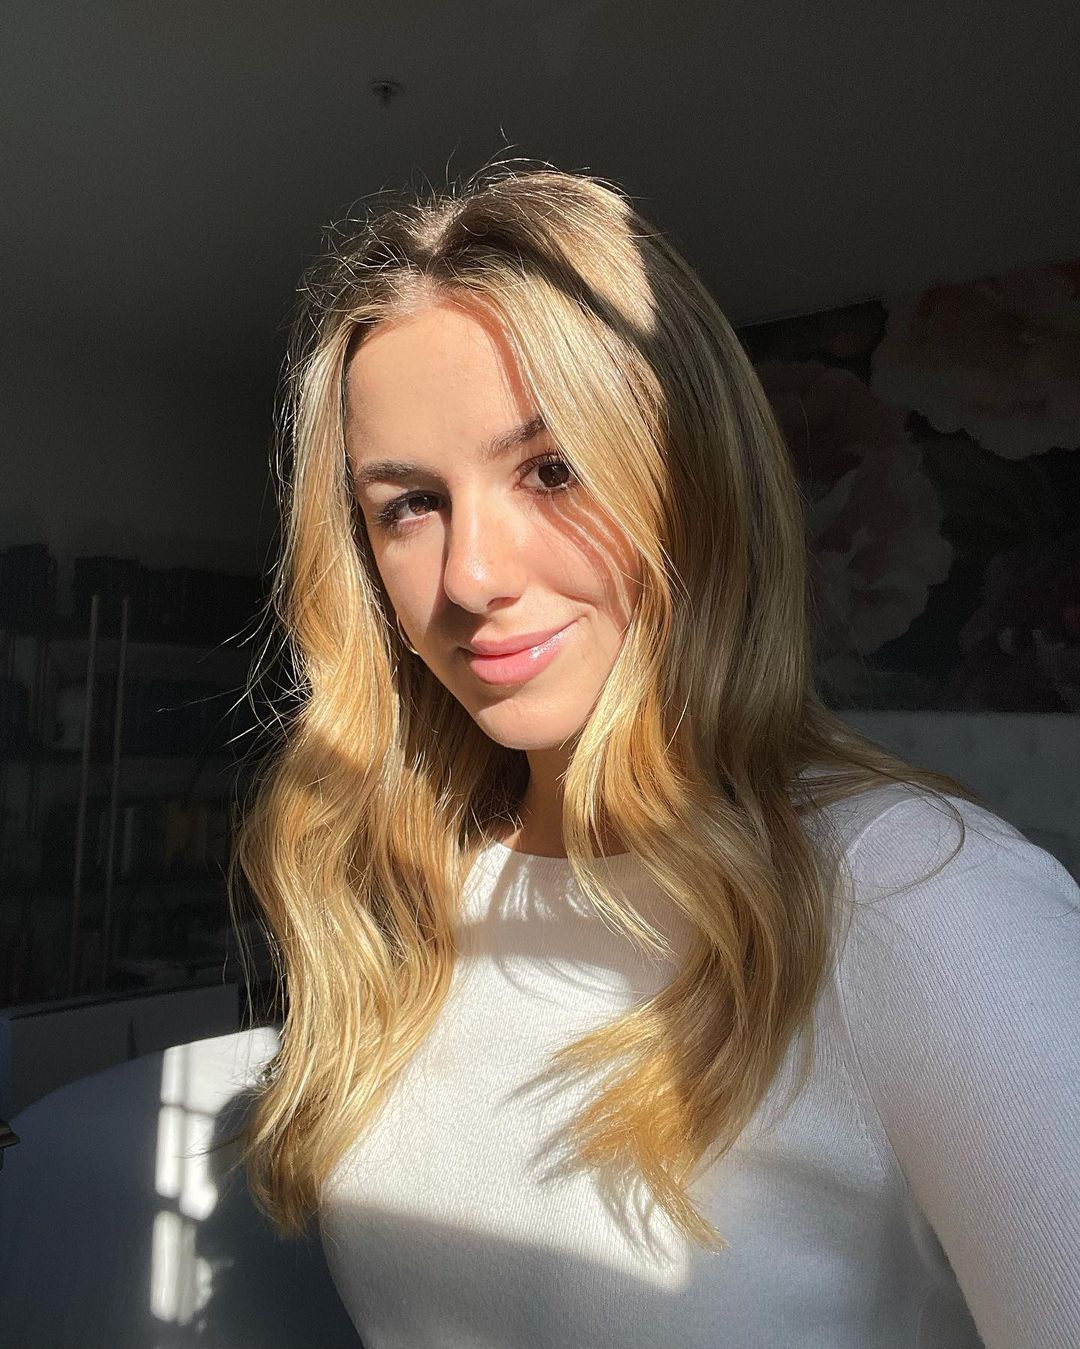 Chloe lukasiak 38 hottest pics, chloe lukasiak 38 instagram